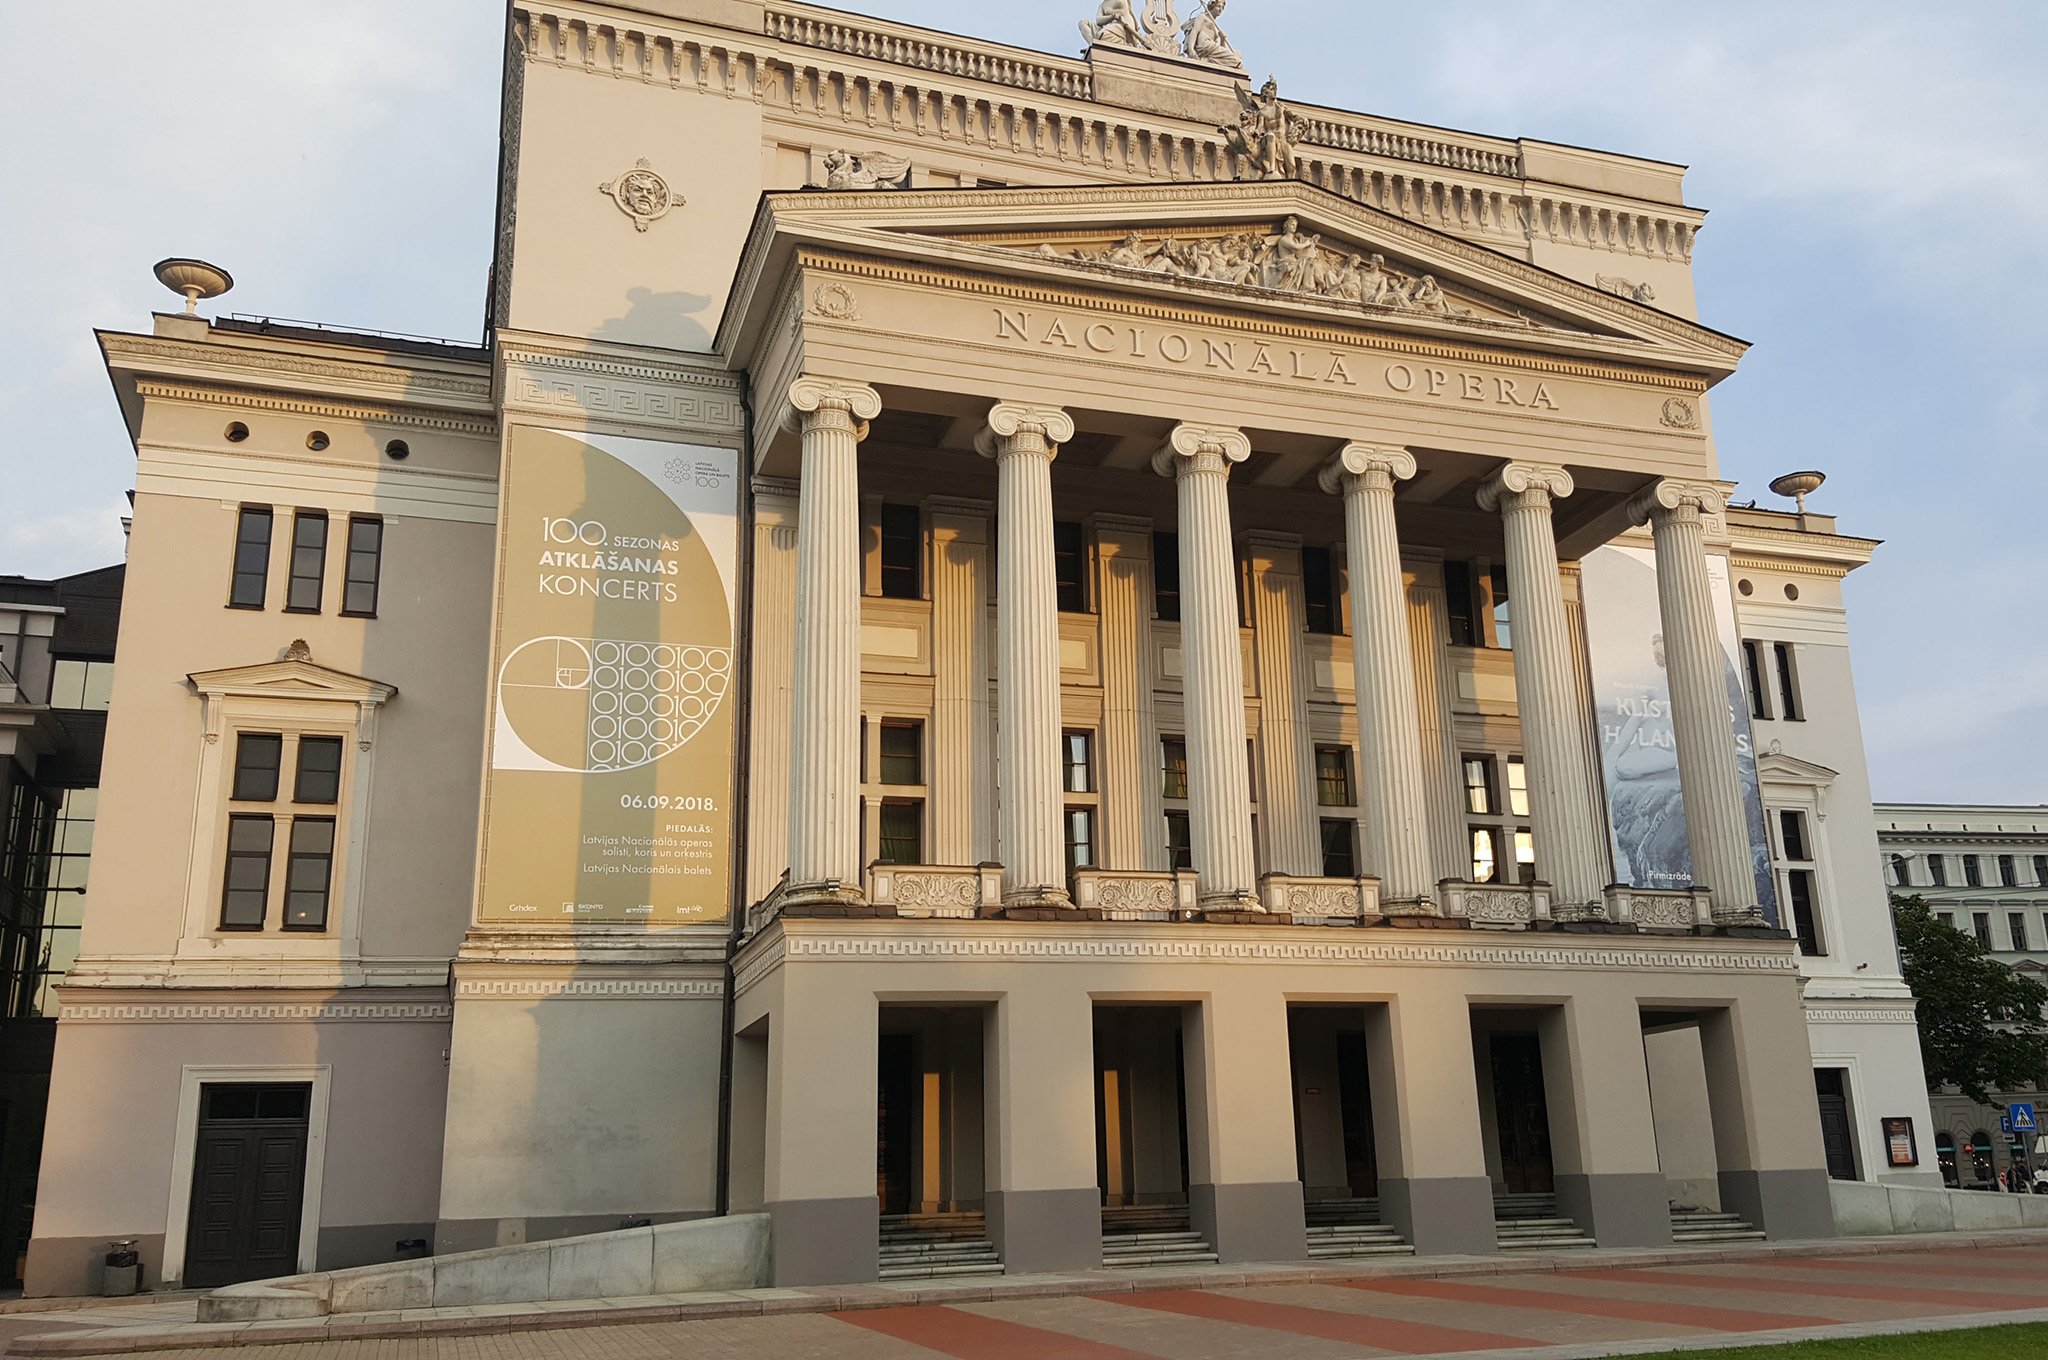 Riga National Oper